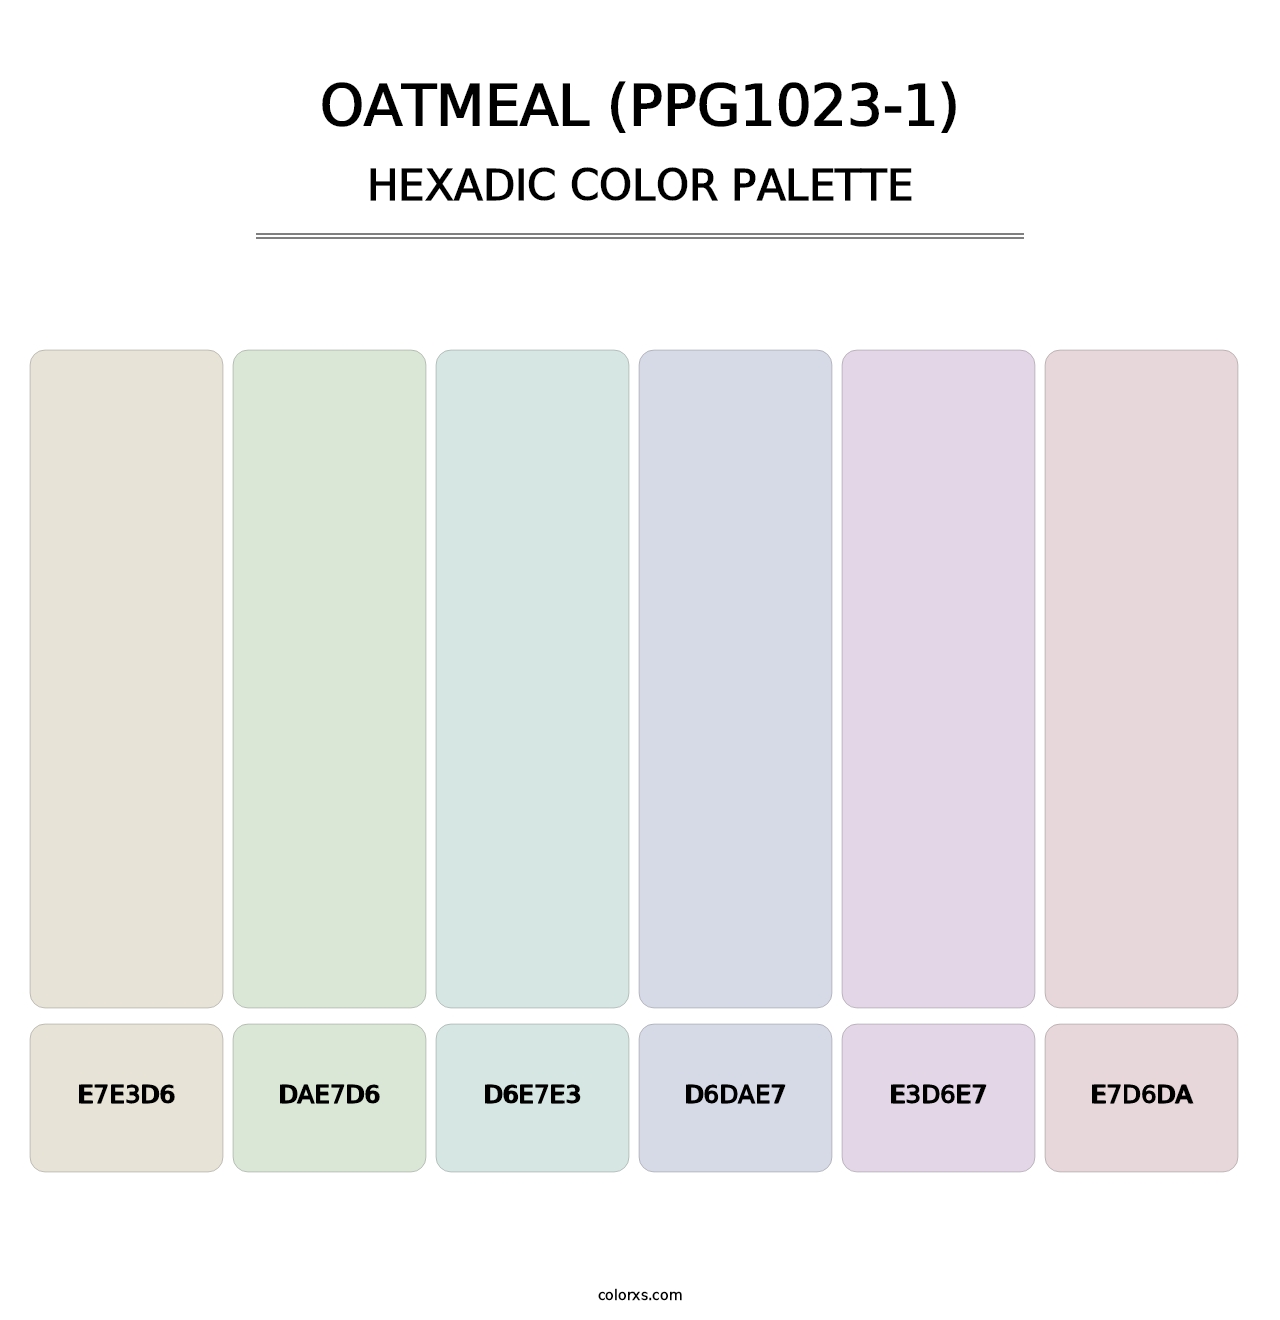 Oatmeal (PPG1023-1) - Hexadic Color Palette